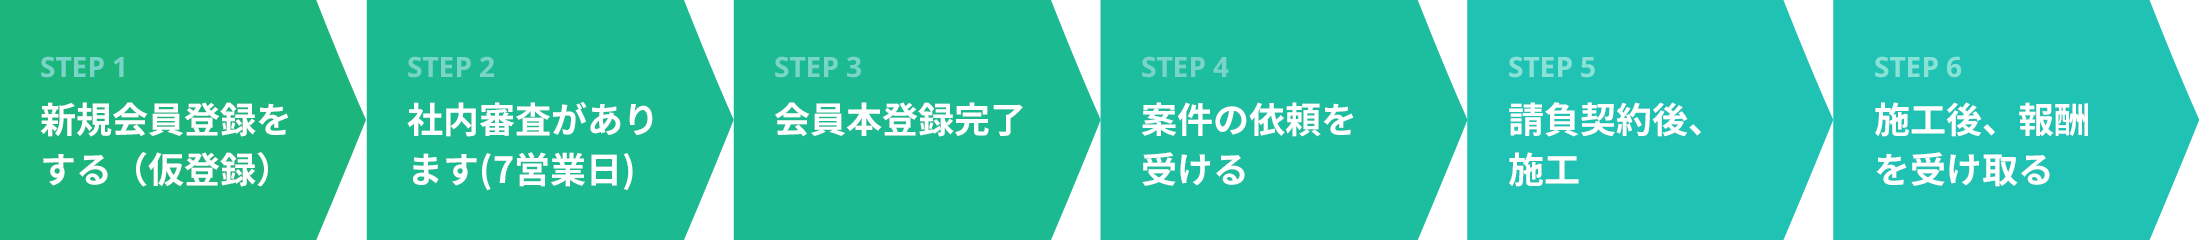 Step1 新規会員登録をする（仮登録） → Step2 社内審査があります（7営業日） → Step3 会員本登録完了 → Step4 案件の依頼を受ける → Step5 請負契約後、施工 → Step6 施工後、報酬を受け取る